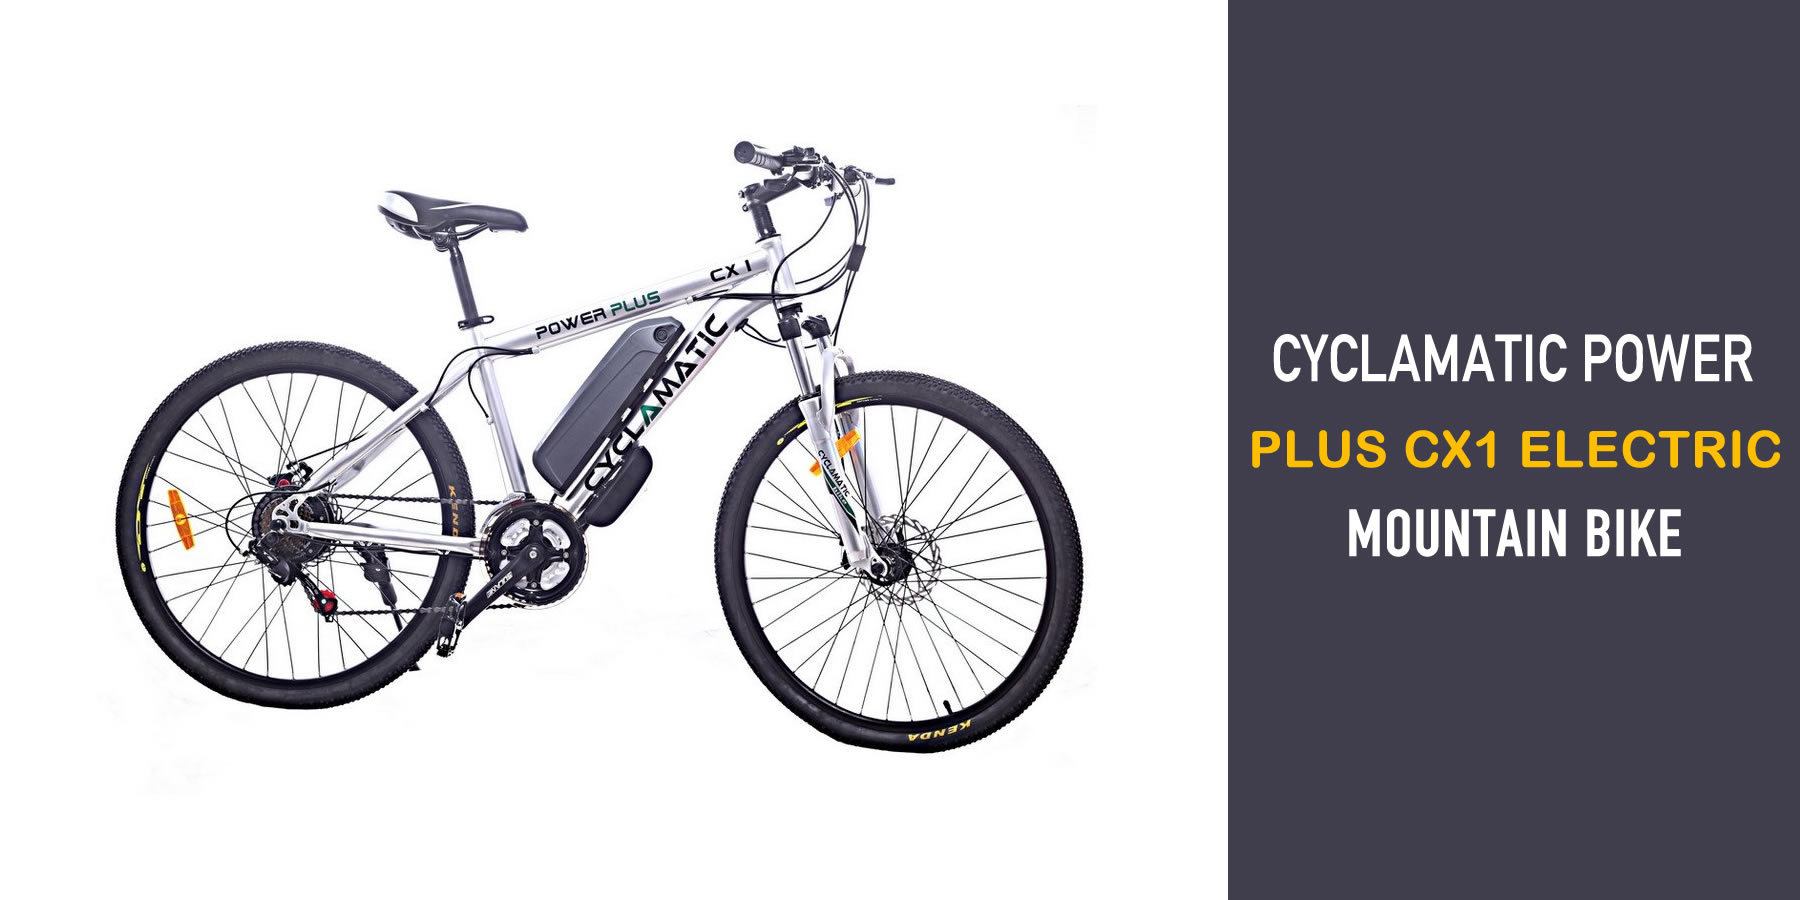 Cyclamatic Power Plus CX1 Electric Mountain Bike Review